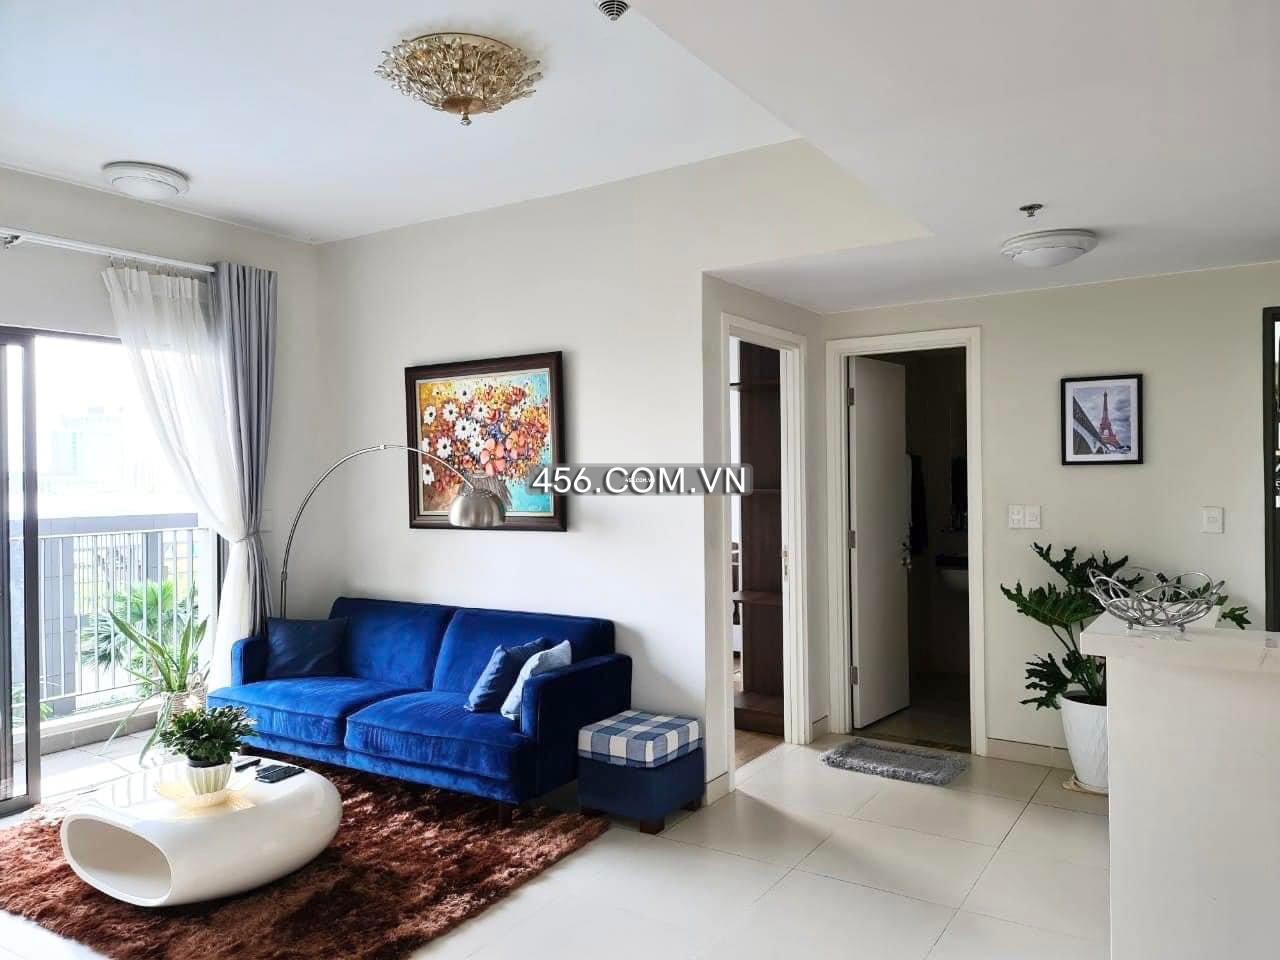 2 Bedrooms Masteri Thao Dien apartment for...